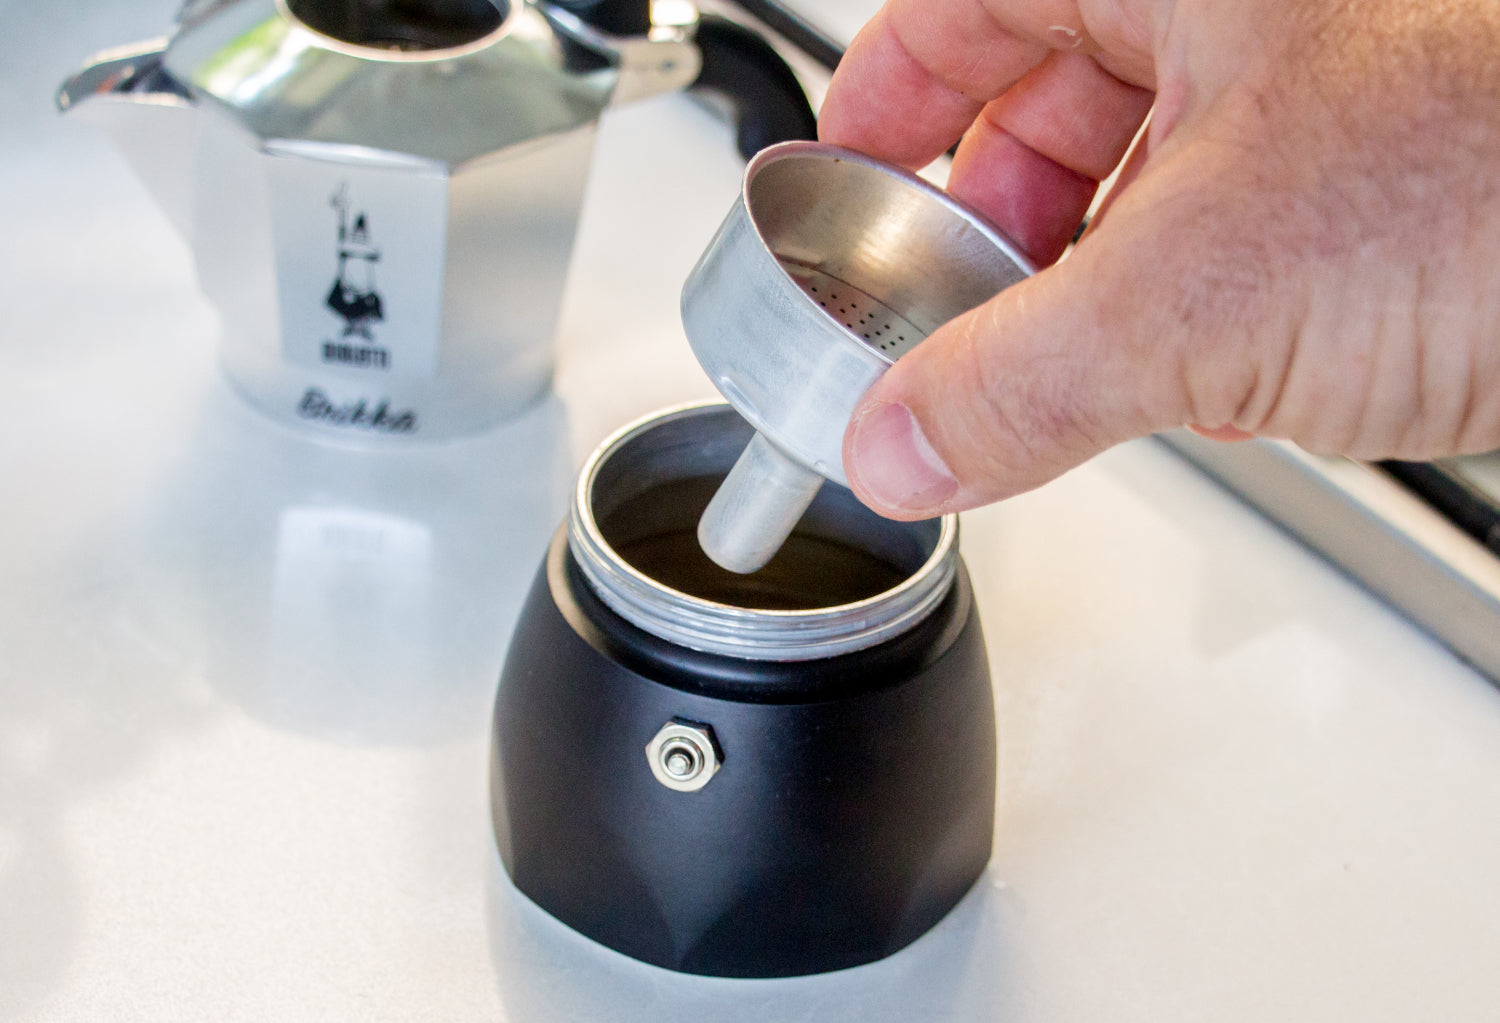 Bialetti New Brikka 2020 2-Cup Coffee Maker